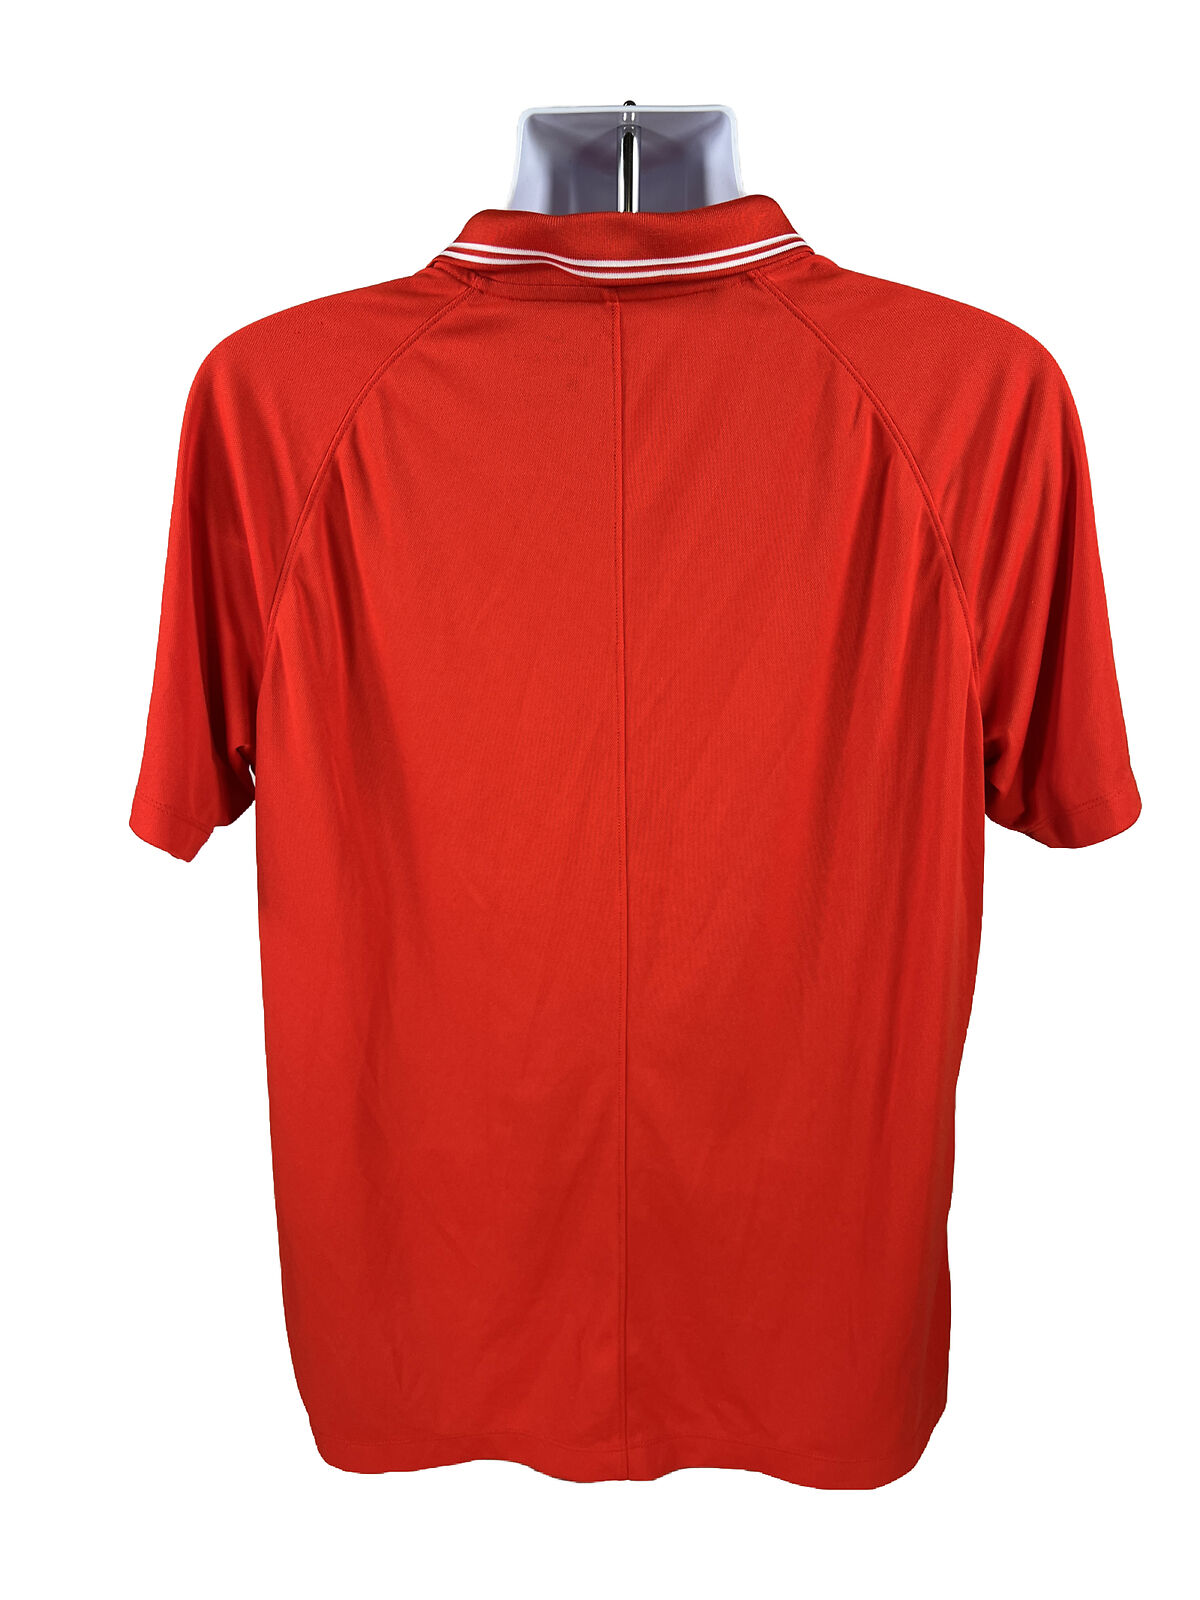 Nike Men's Red Dri-Fit Short Sleeve Golf Polo Shirt - L